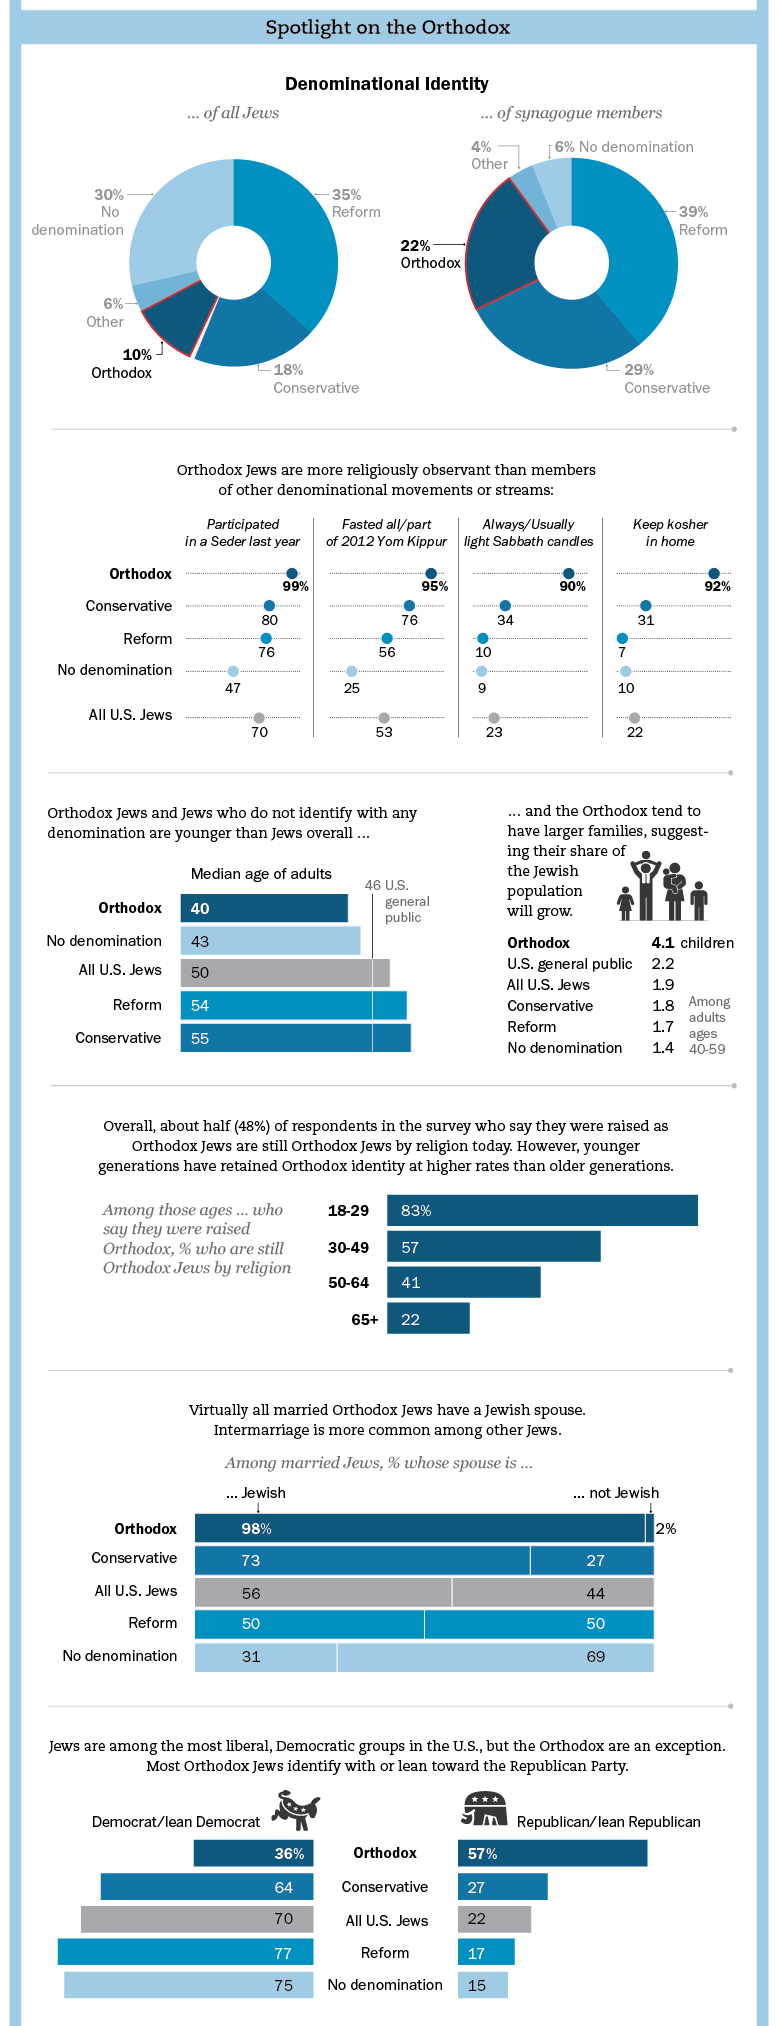 Infographic: Survey of Jewish Americans